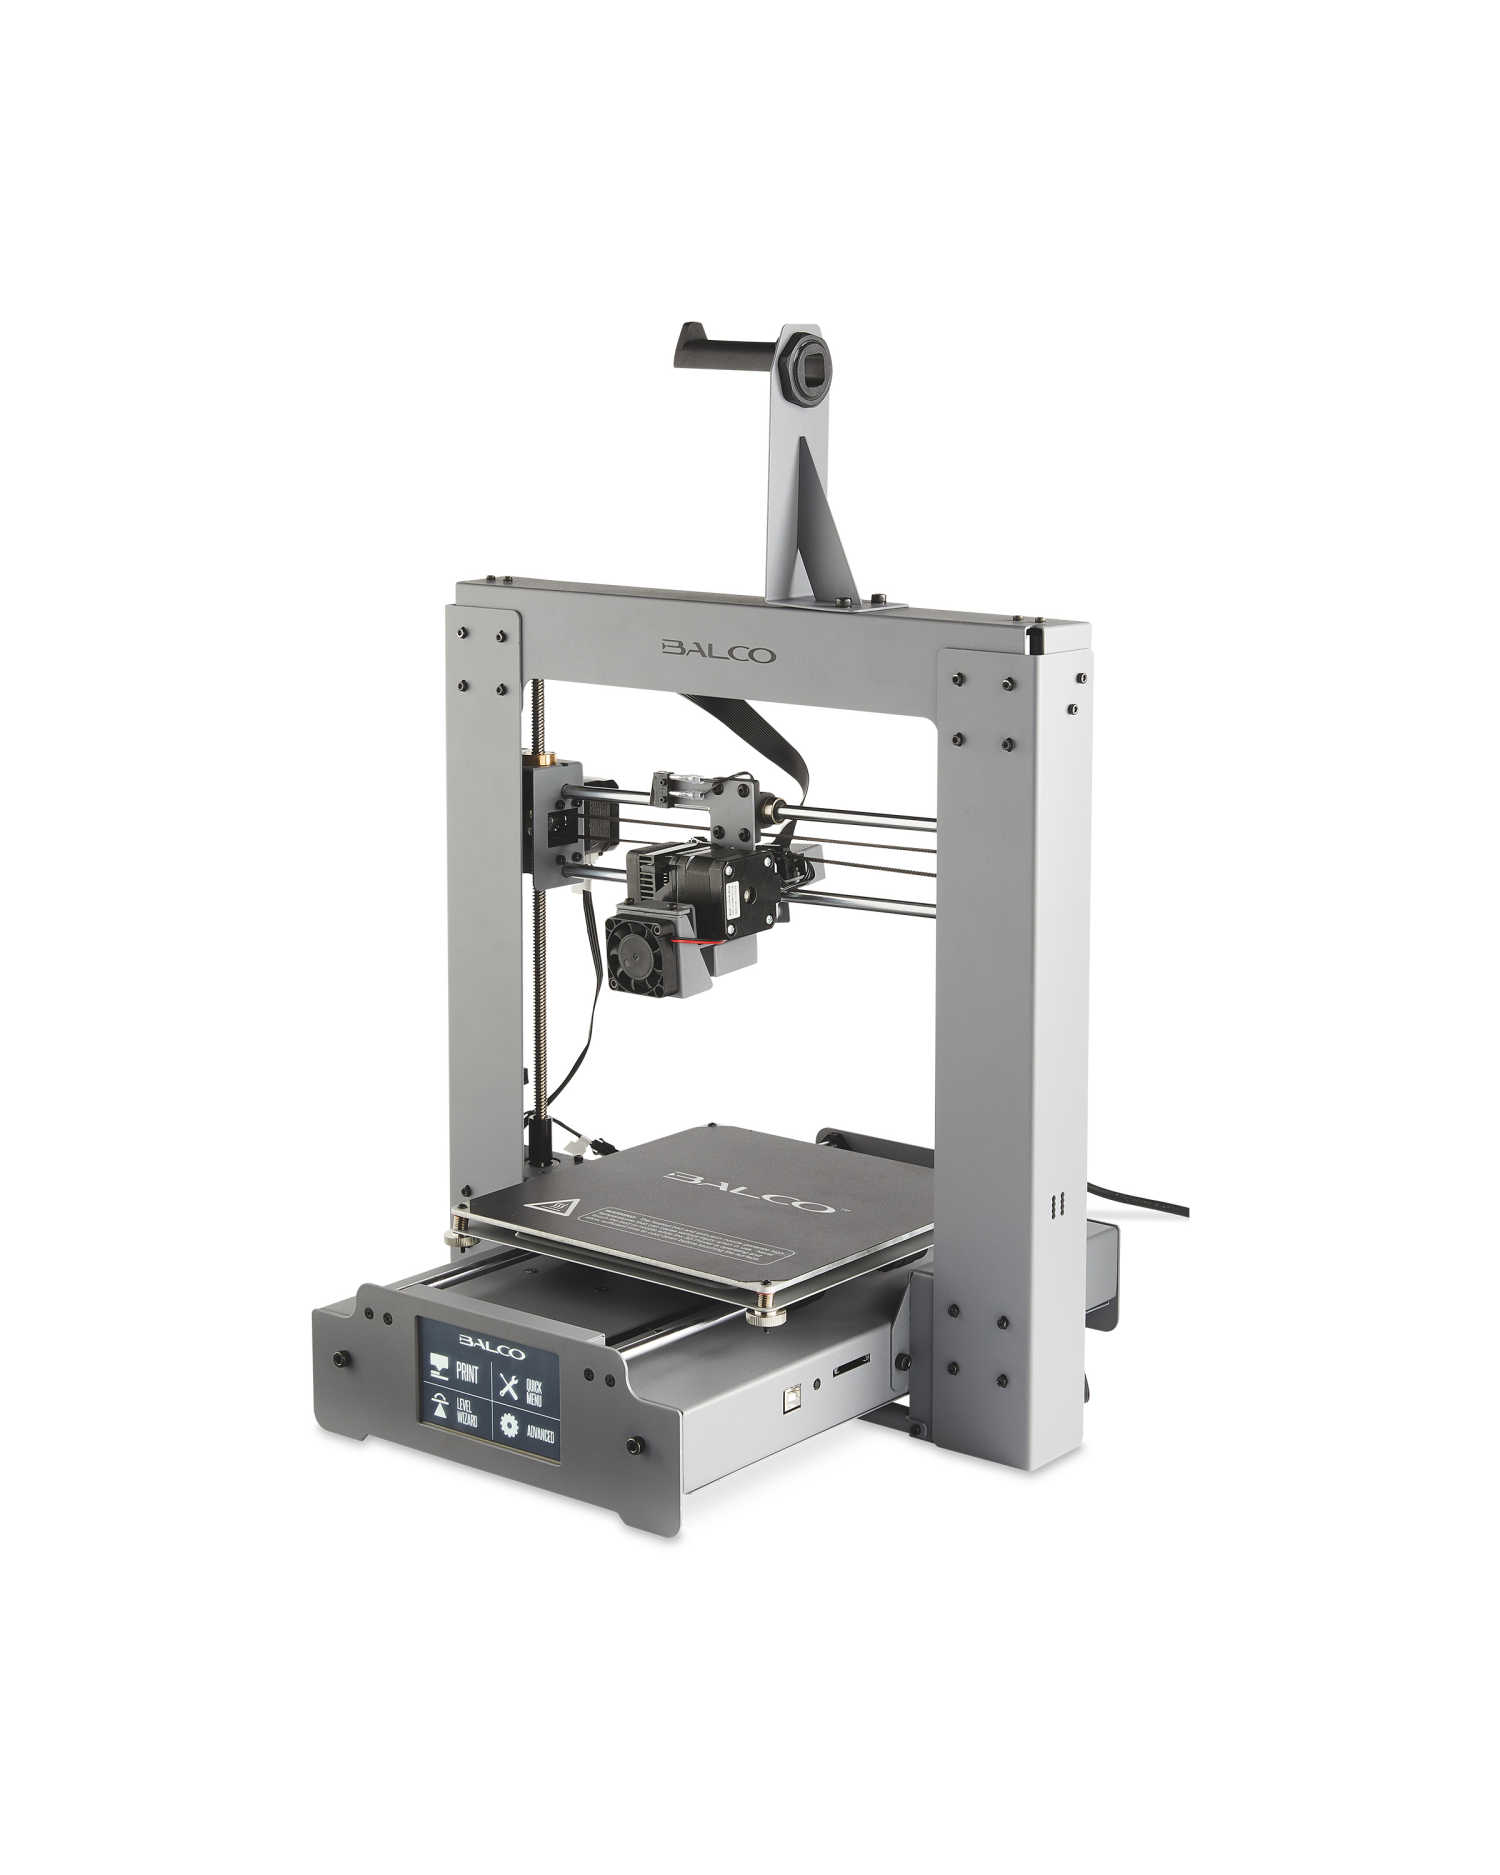 The Balco 3D printer. Image via Aldi